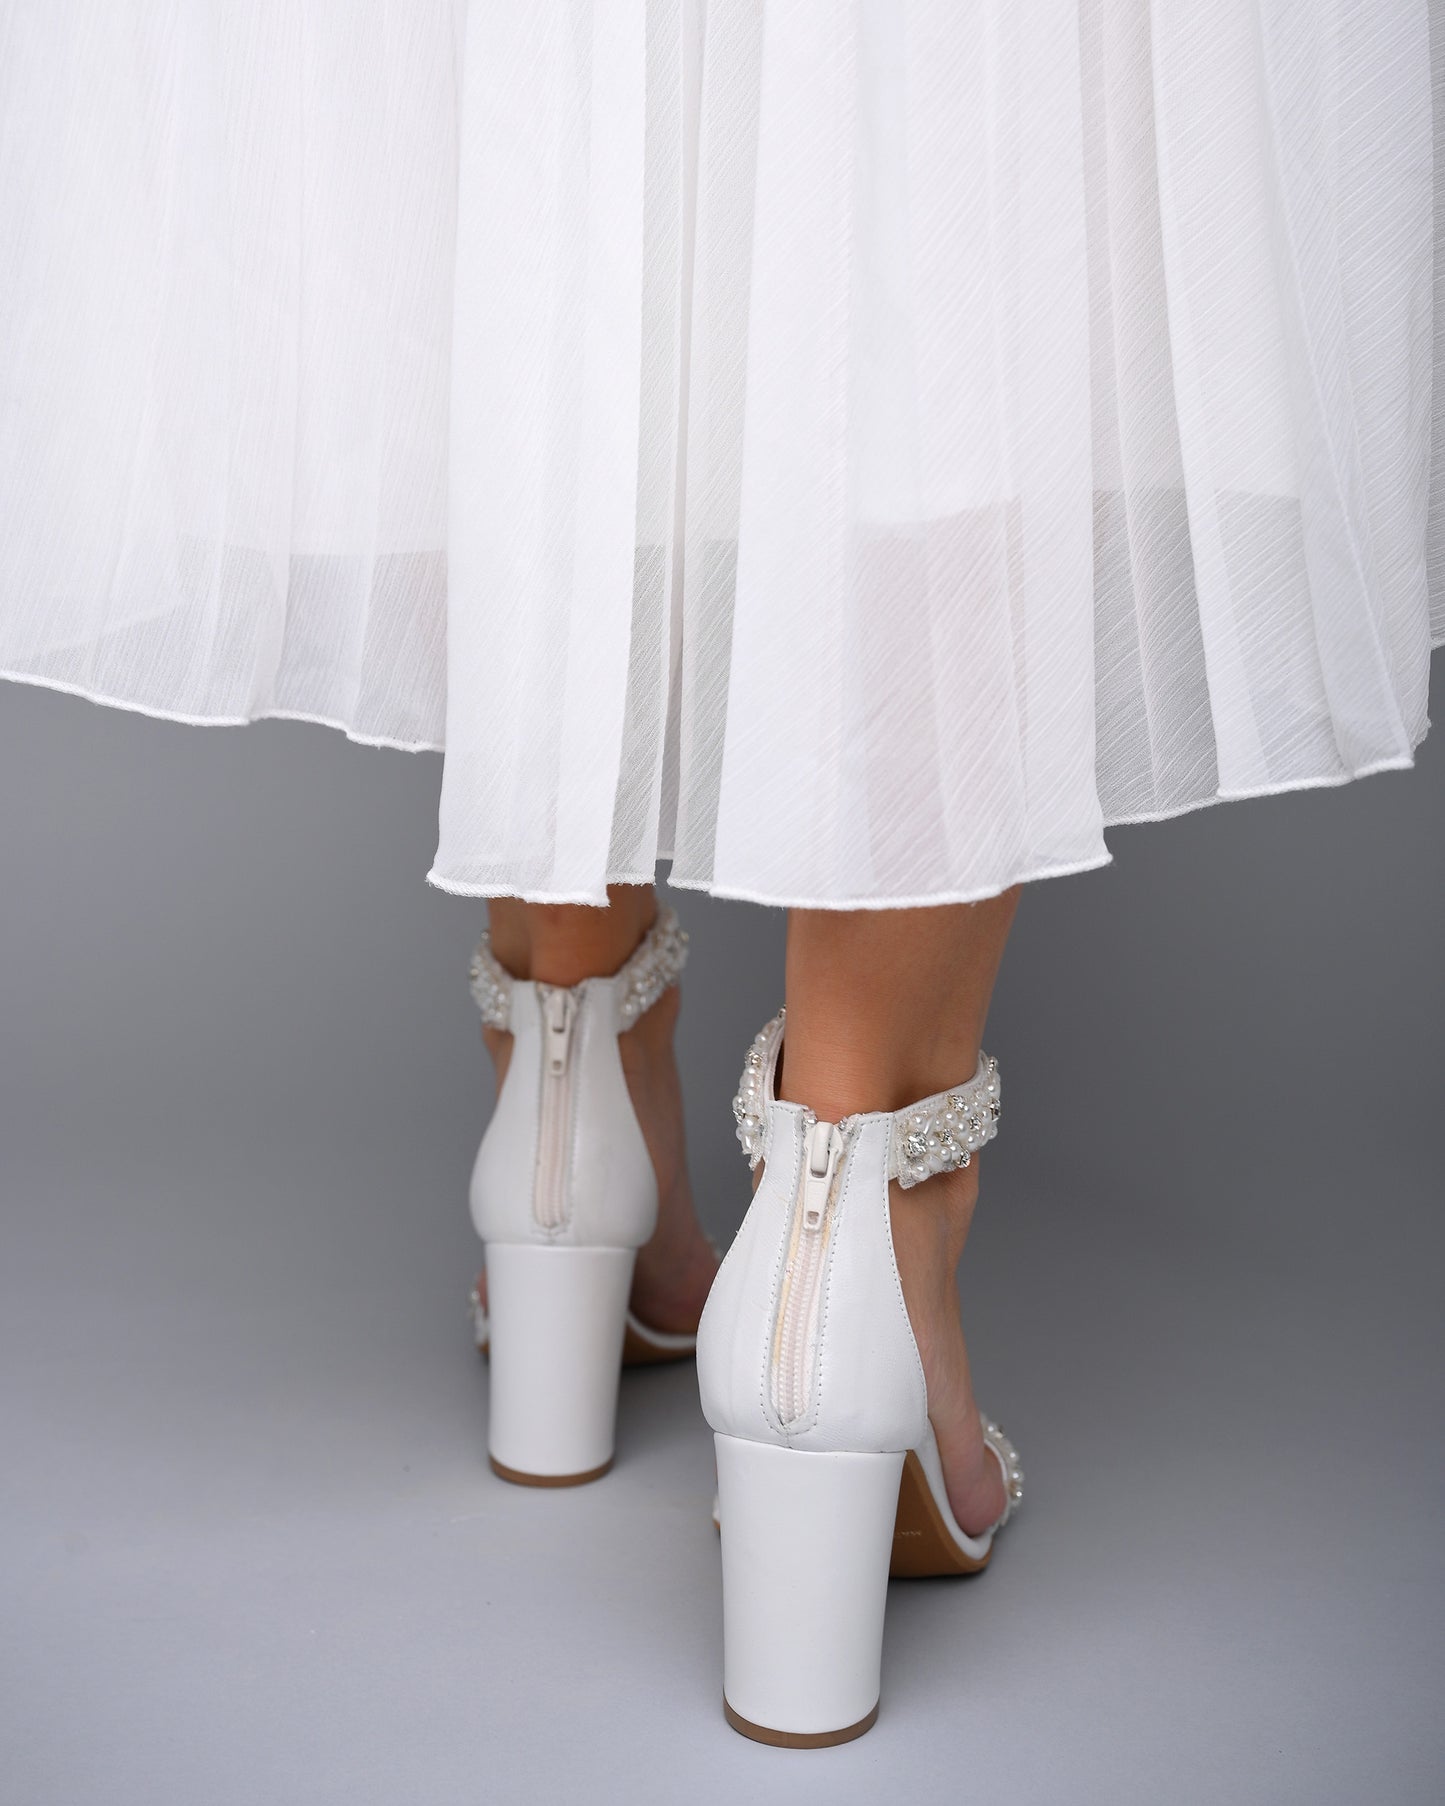 bridal sandals for wedding